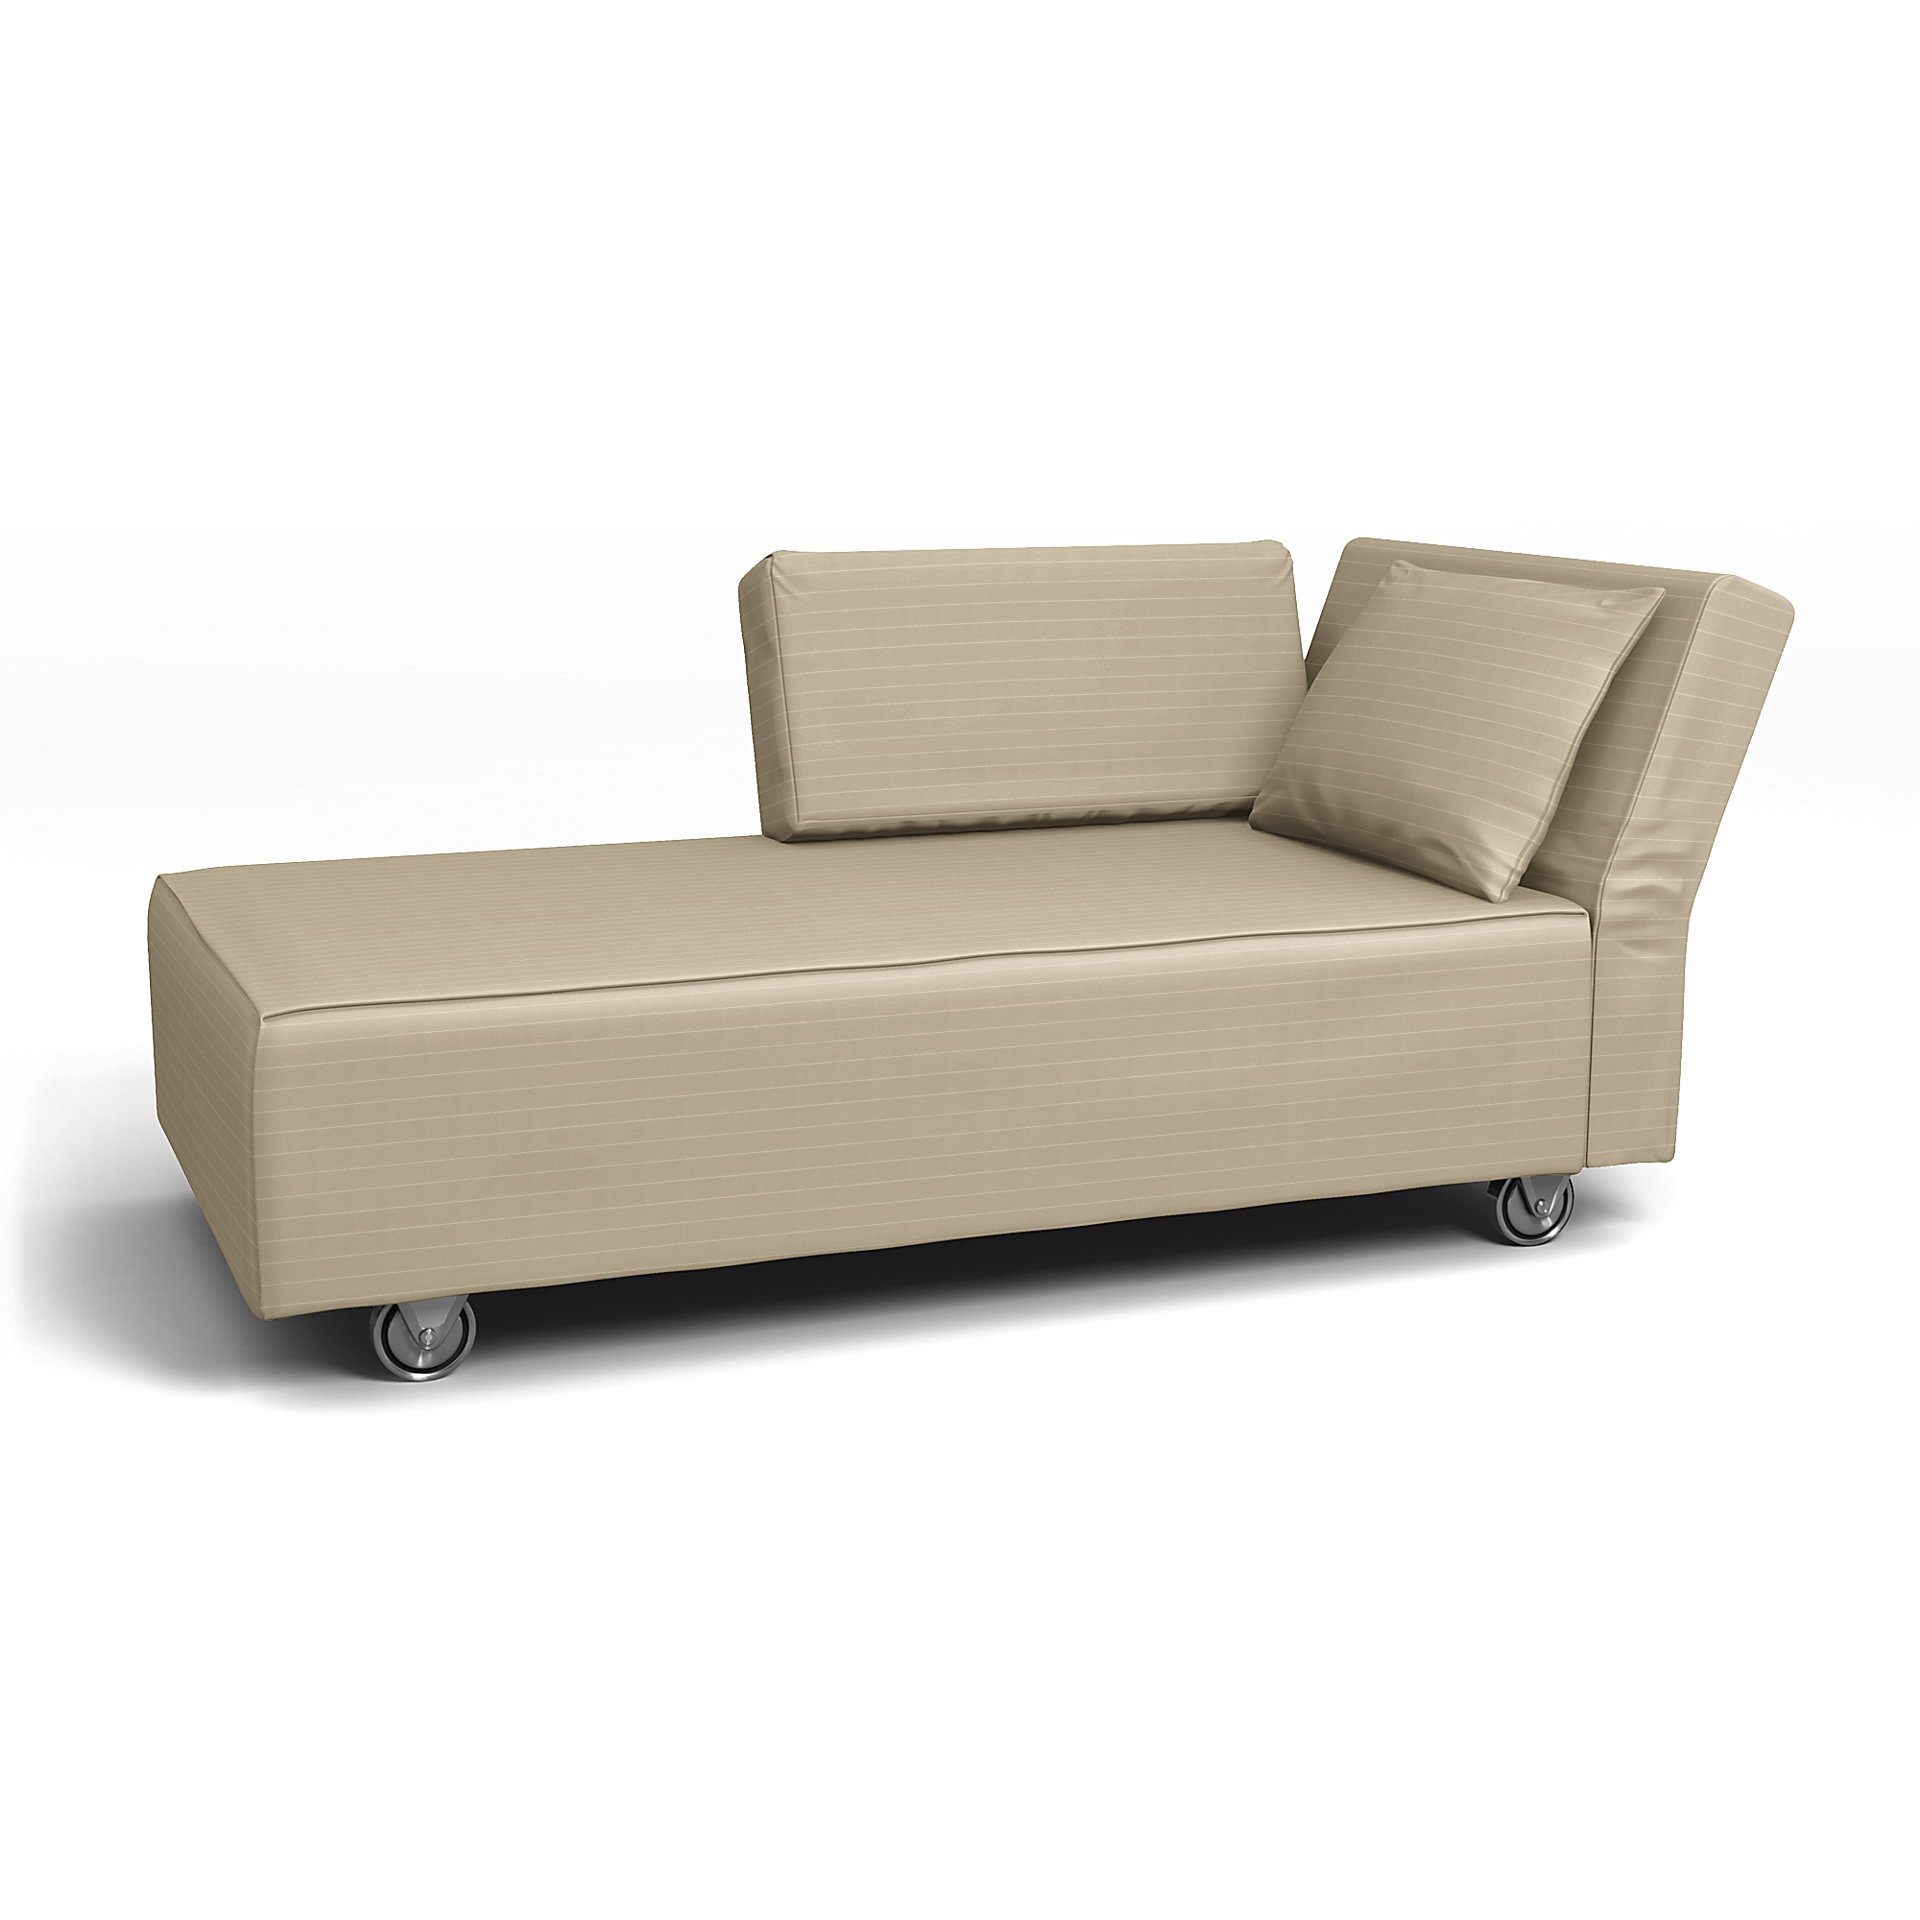 IKEA - Falsterbo Chaise with Right Armrest Cover, Oyster, Velvet - Bemz